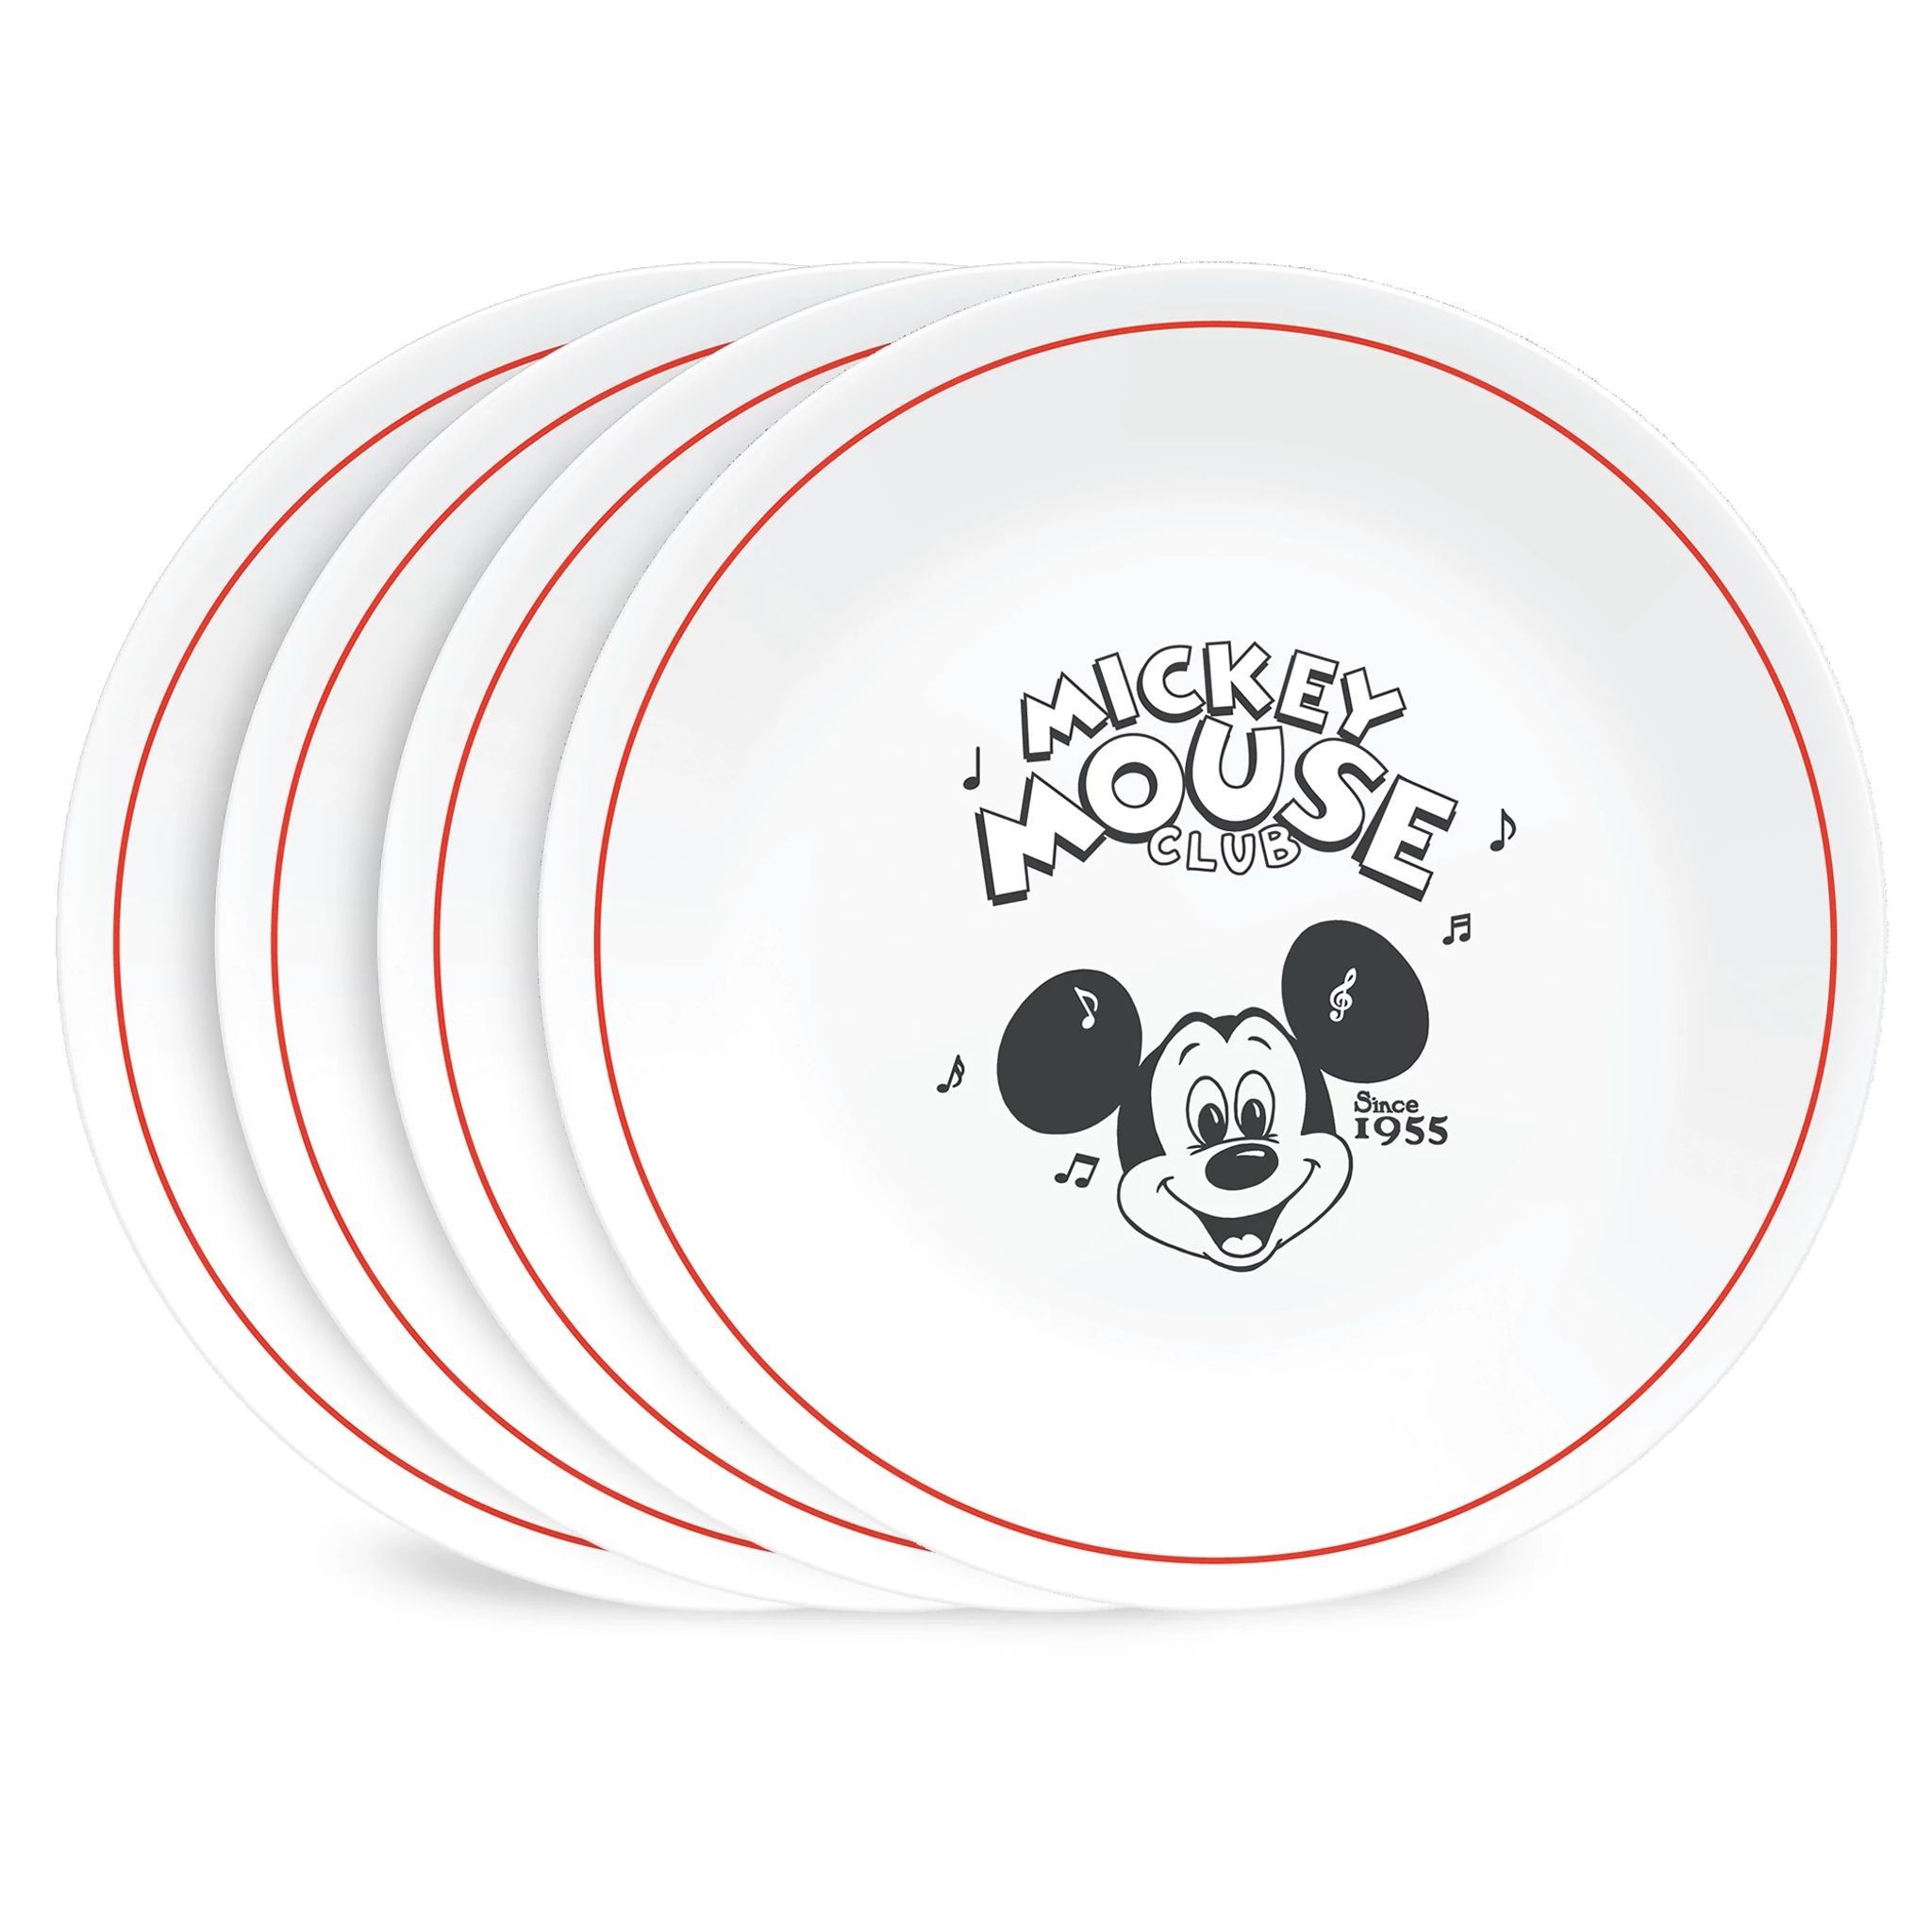 Corelle Disney Star Wars The Child 6.75 Appetizer Plates, 8 Pack